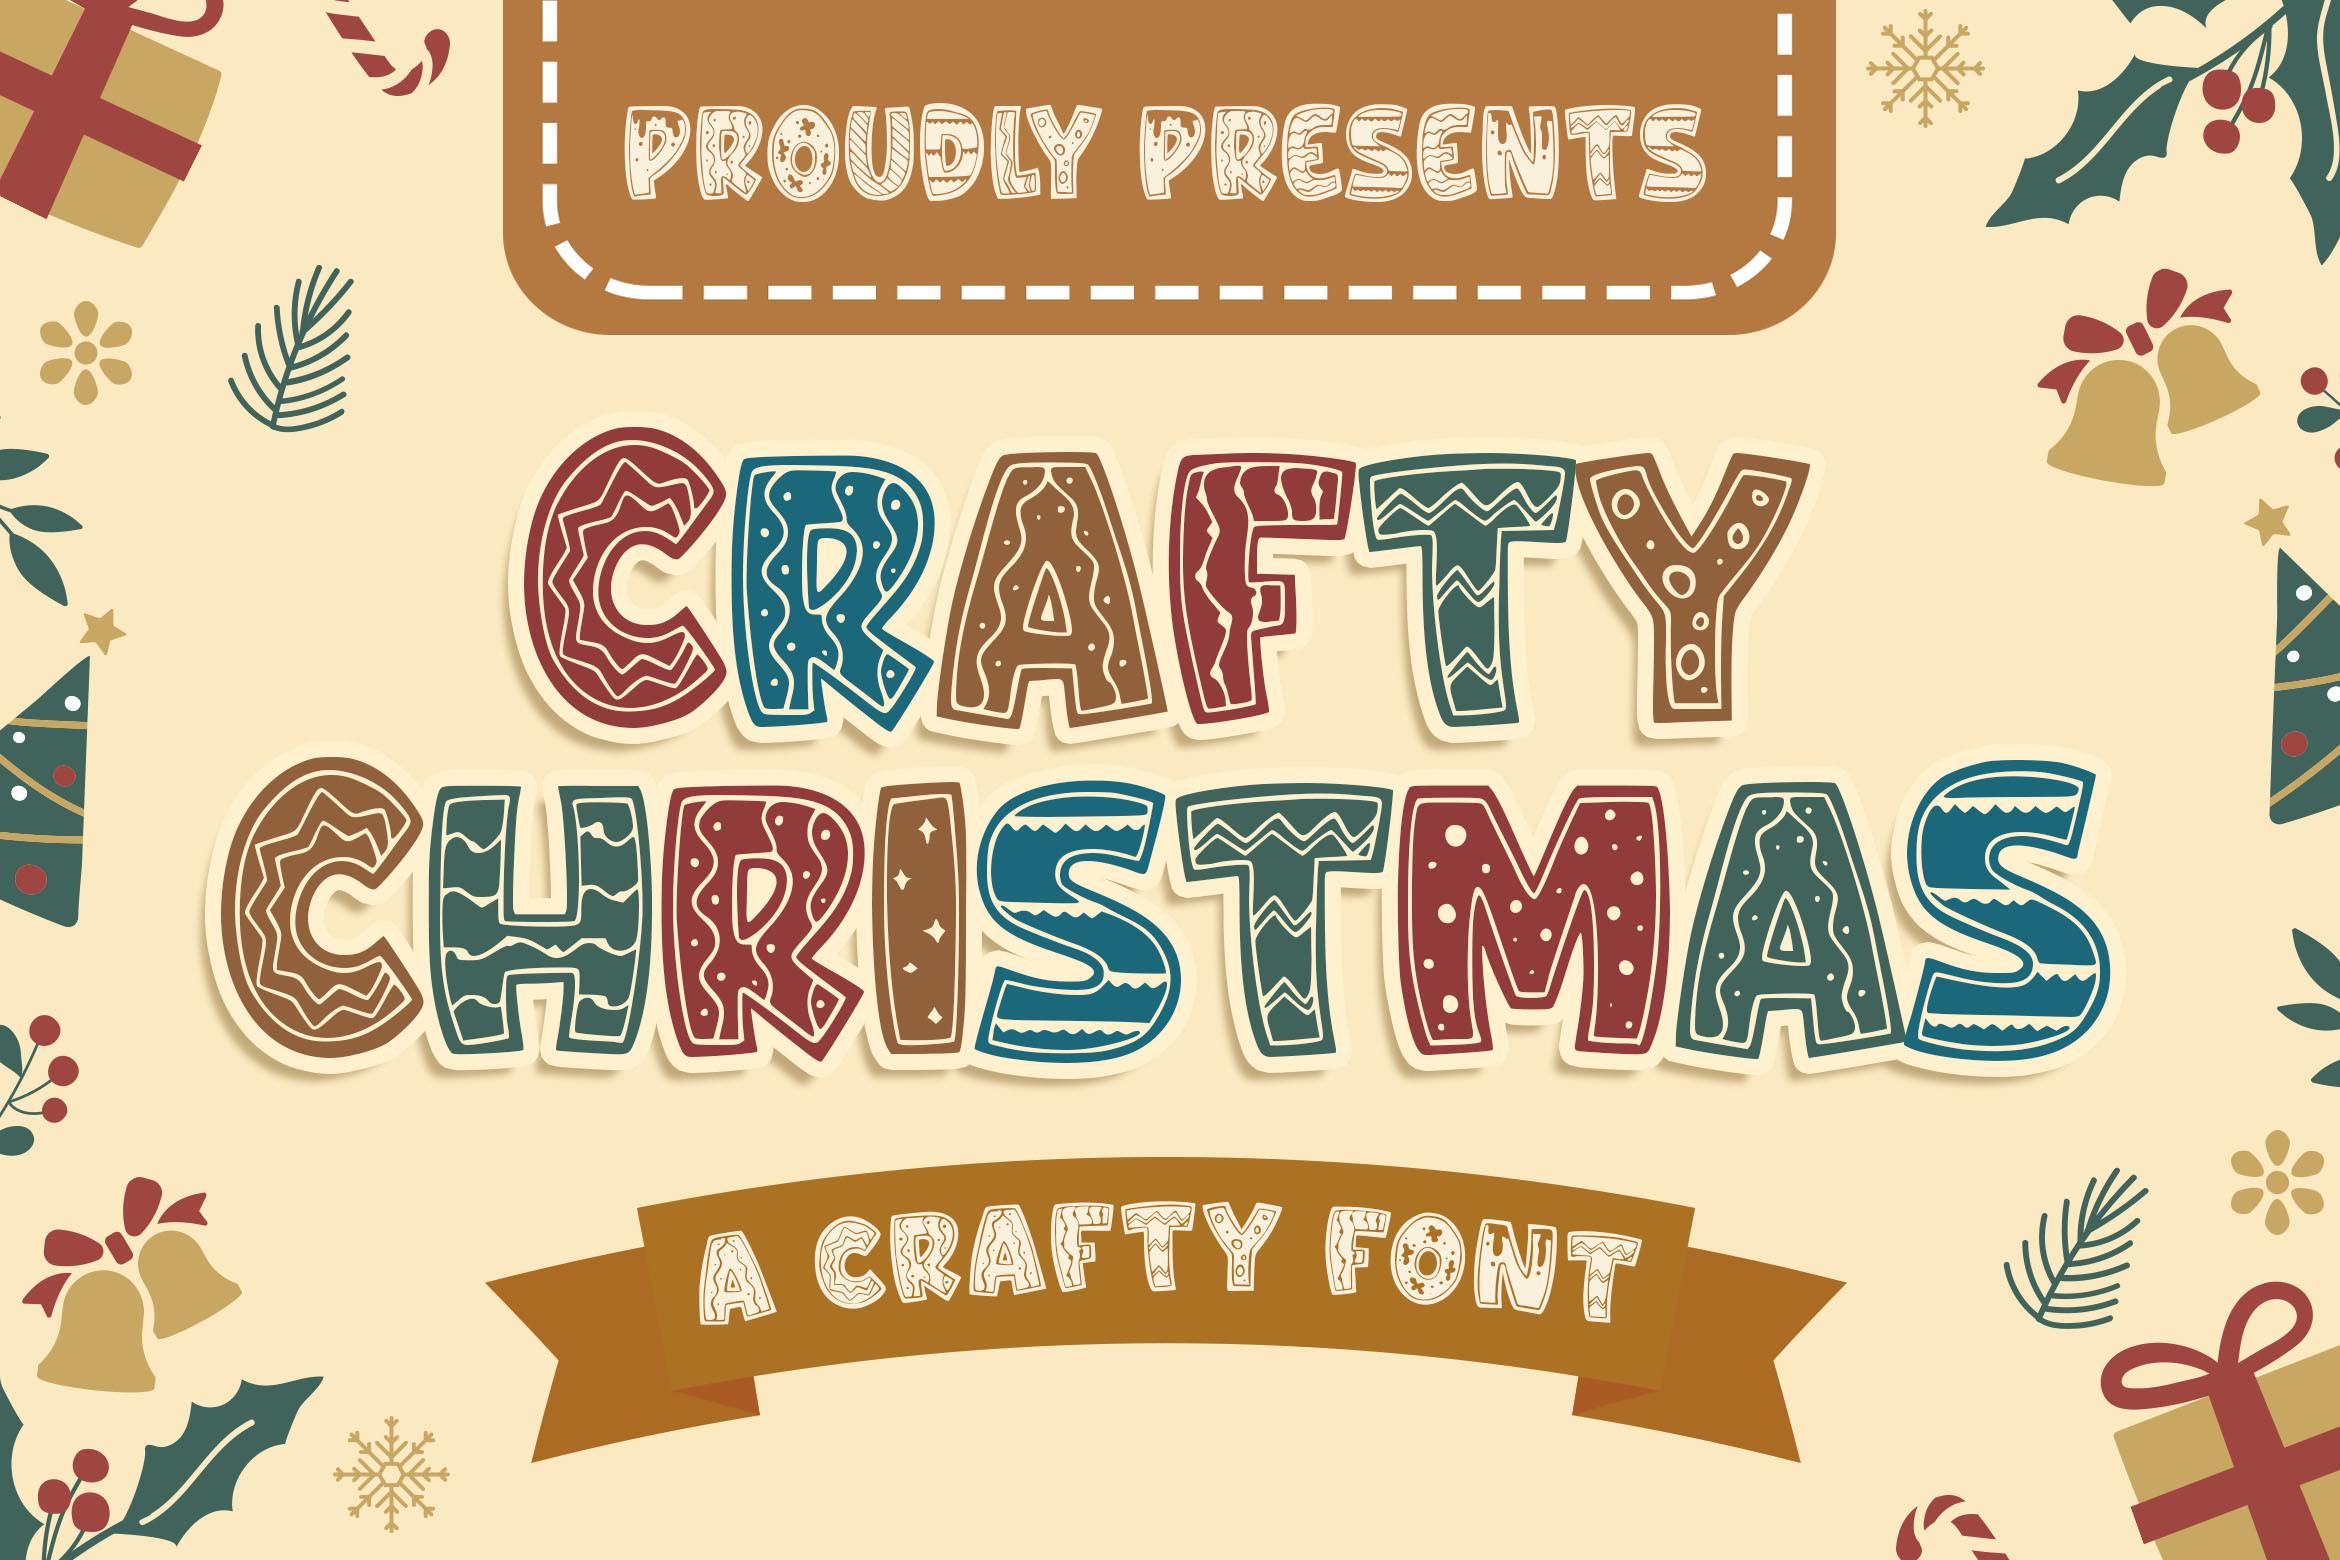 Crafty Christmas Font